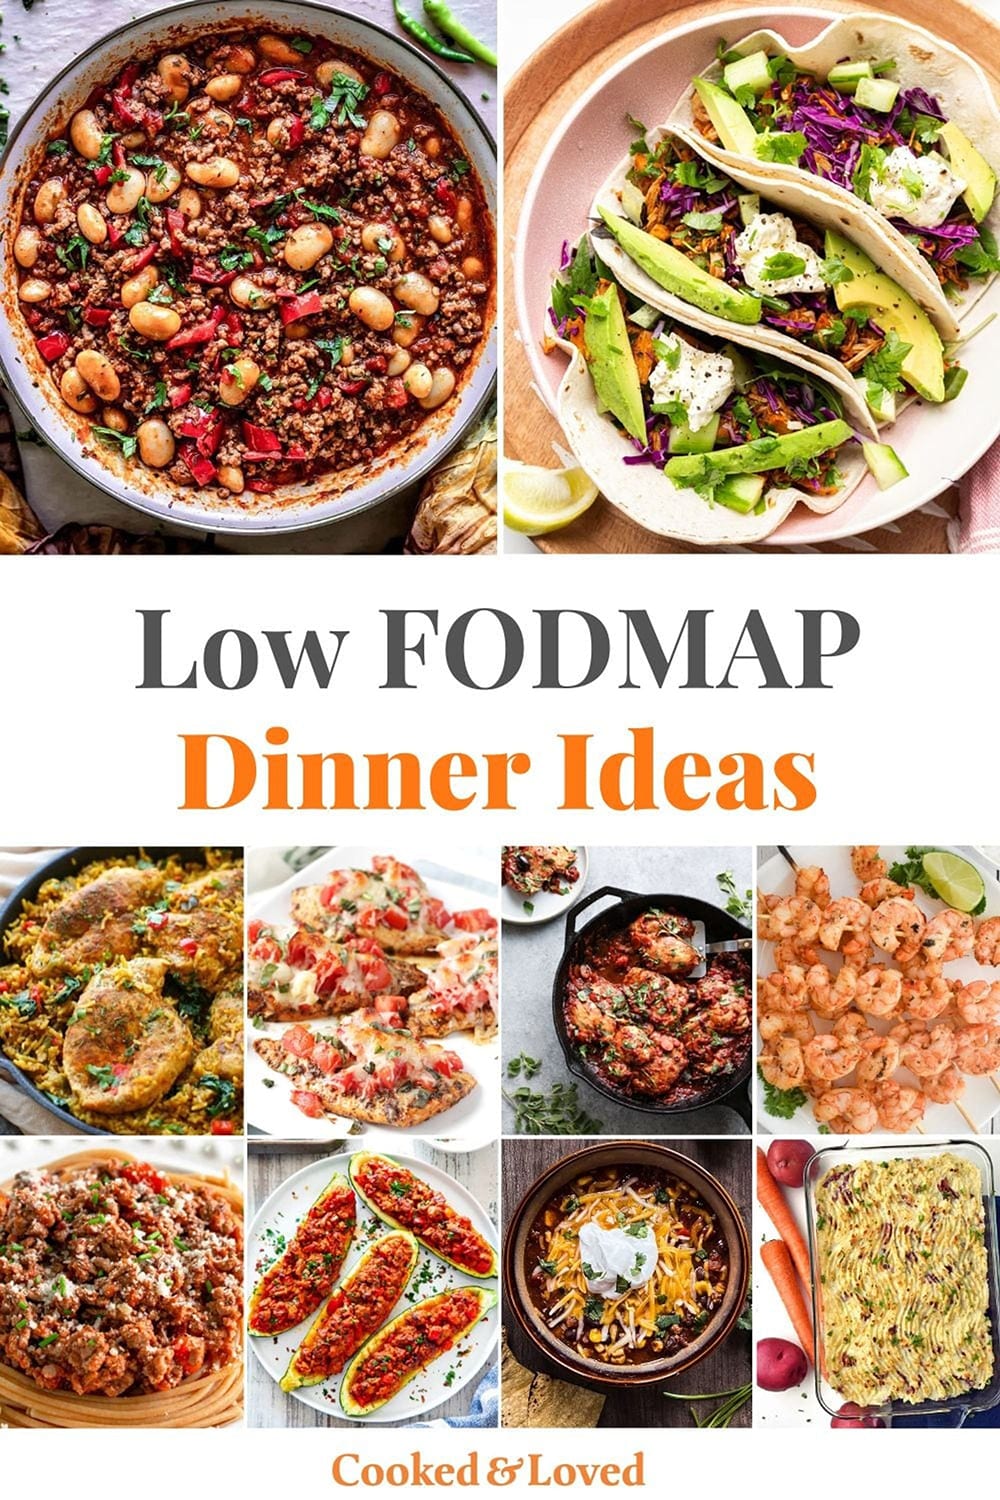 Low FODMAP Dinner Ideas & Recipes